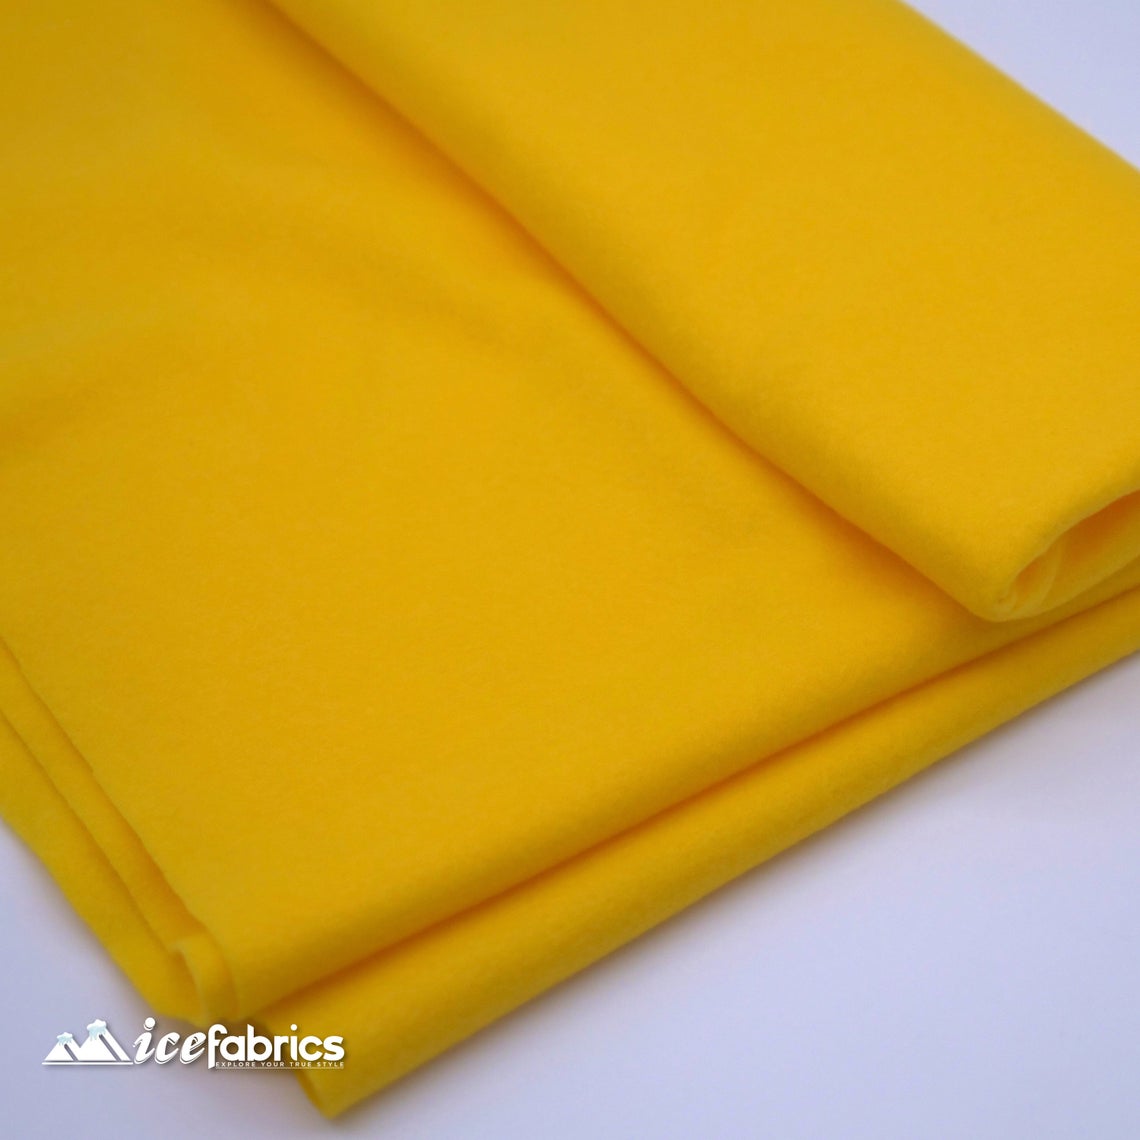 Acrylic Felt Fabric By The Roll | 20 yards | Wholesale Fabric ICE FABRICS Mango Yellow